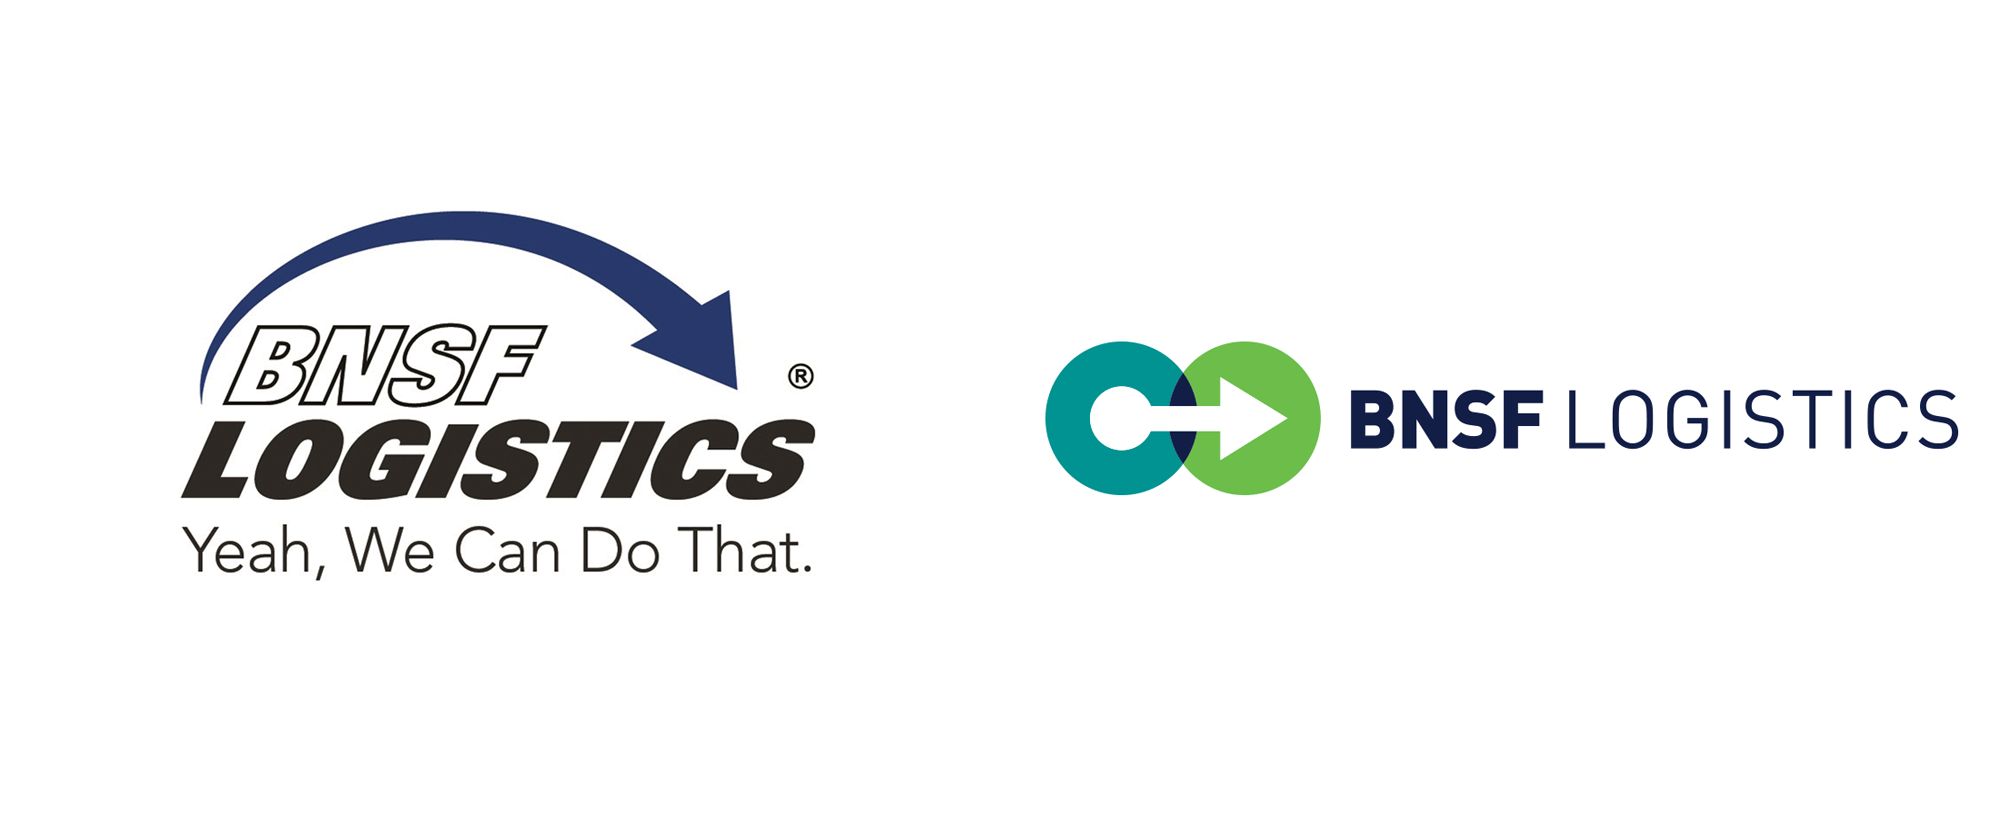 BNSF Logo - Brand New: New Logo for BNSF Logistics